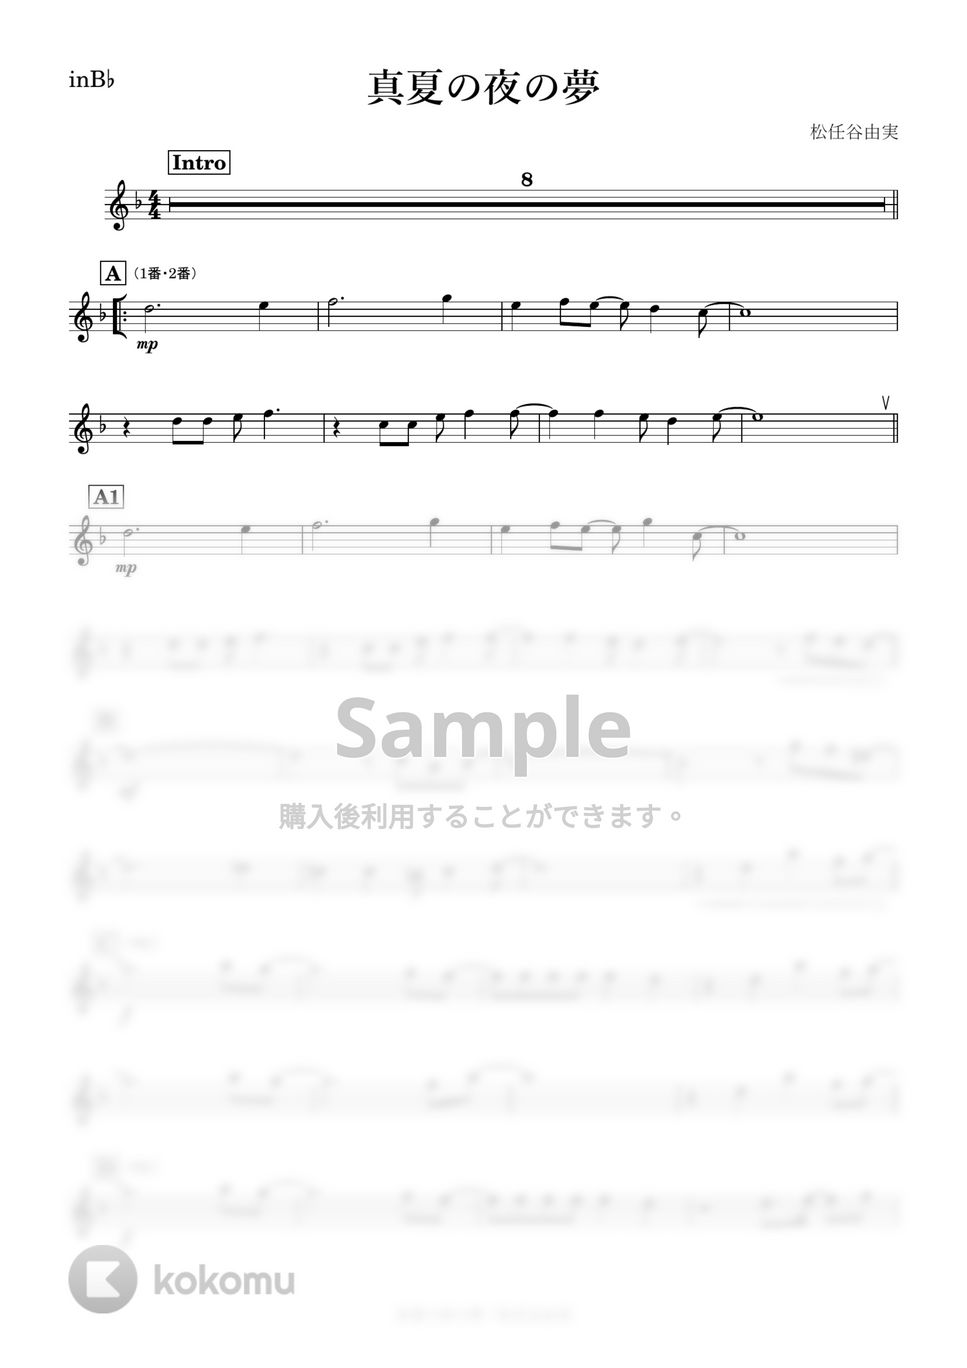 松任谷由実 - 真夏の夜の夢 (B♭) by kanamusic